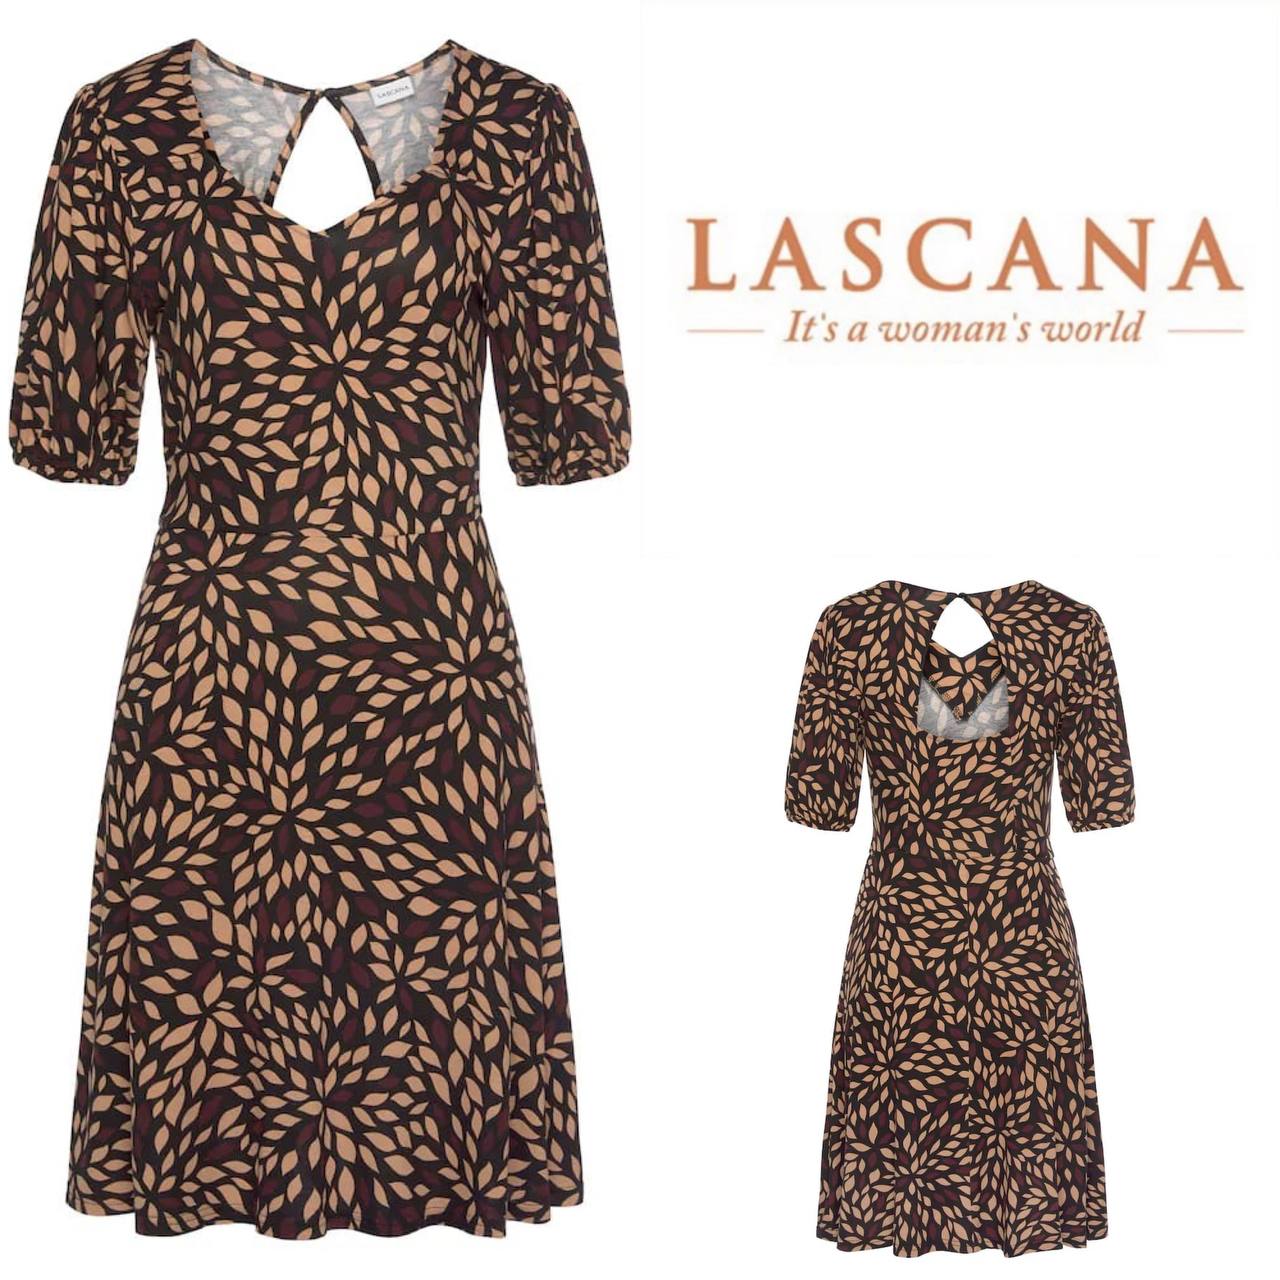 020127 Summer dress by Lascana